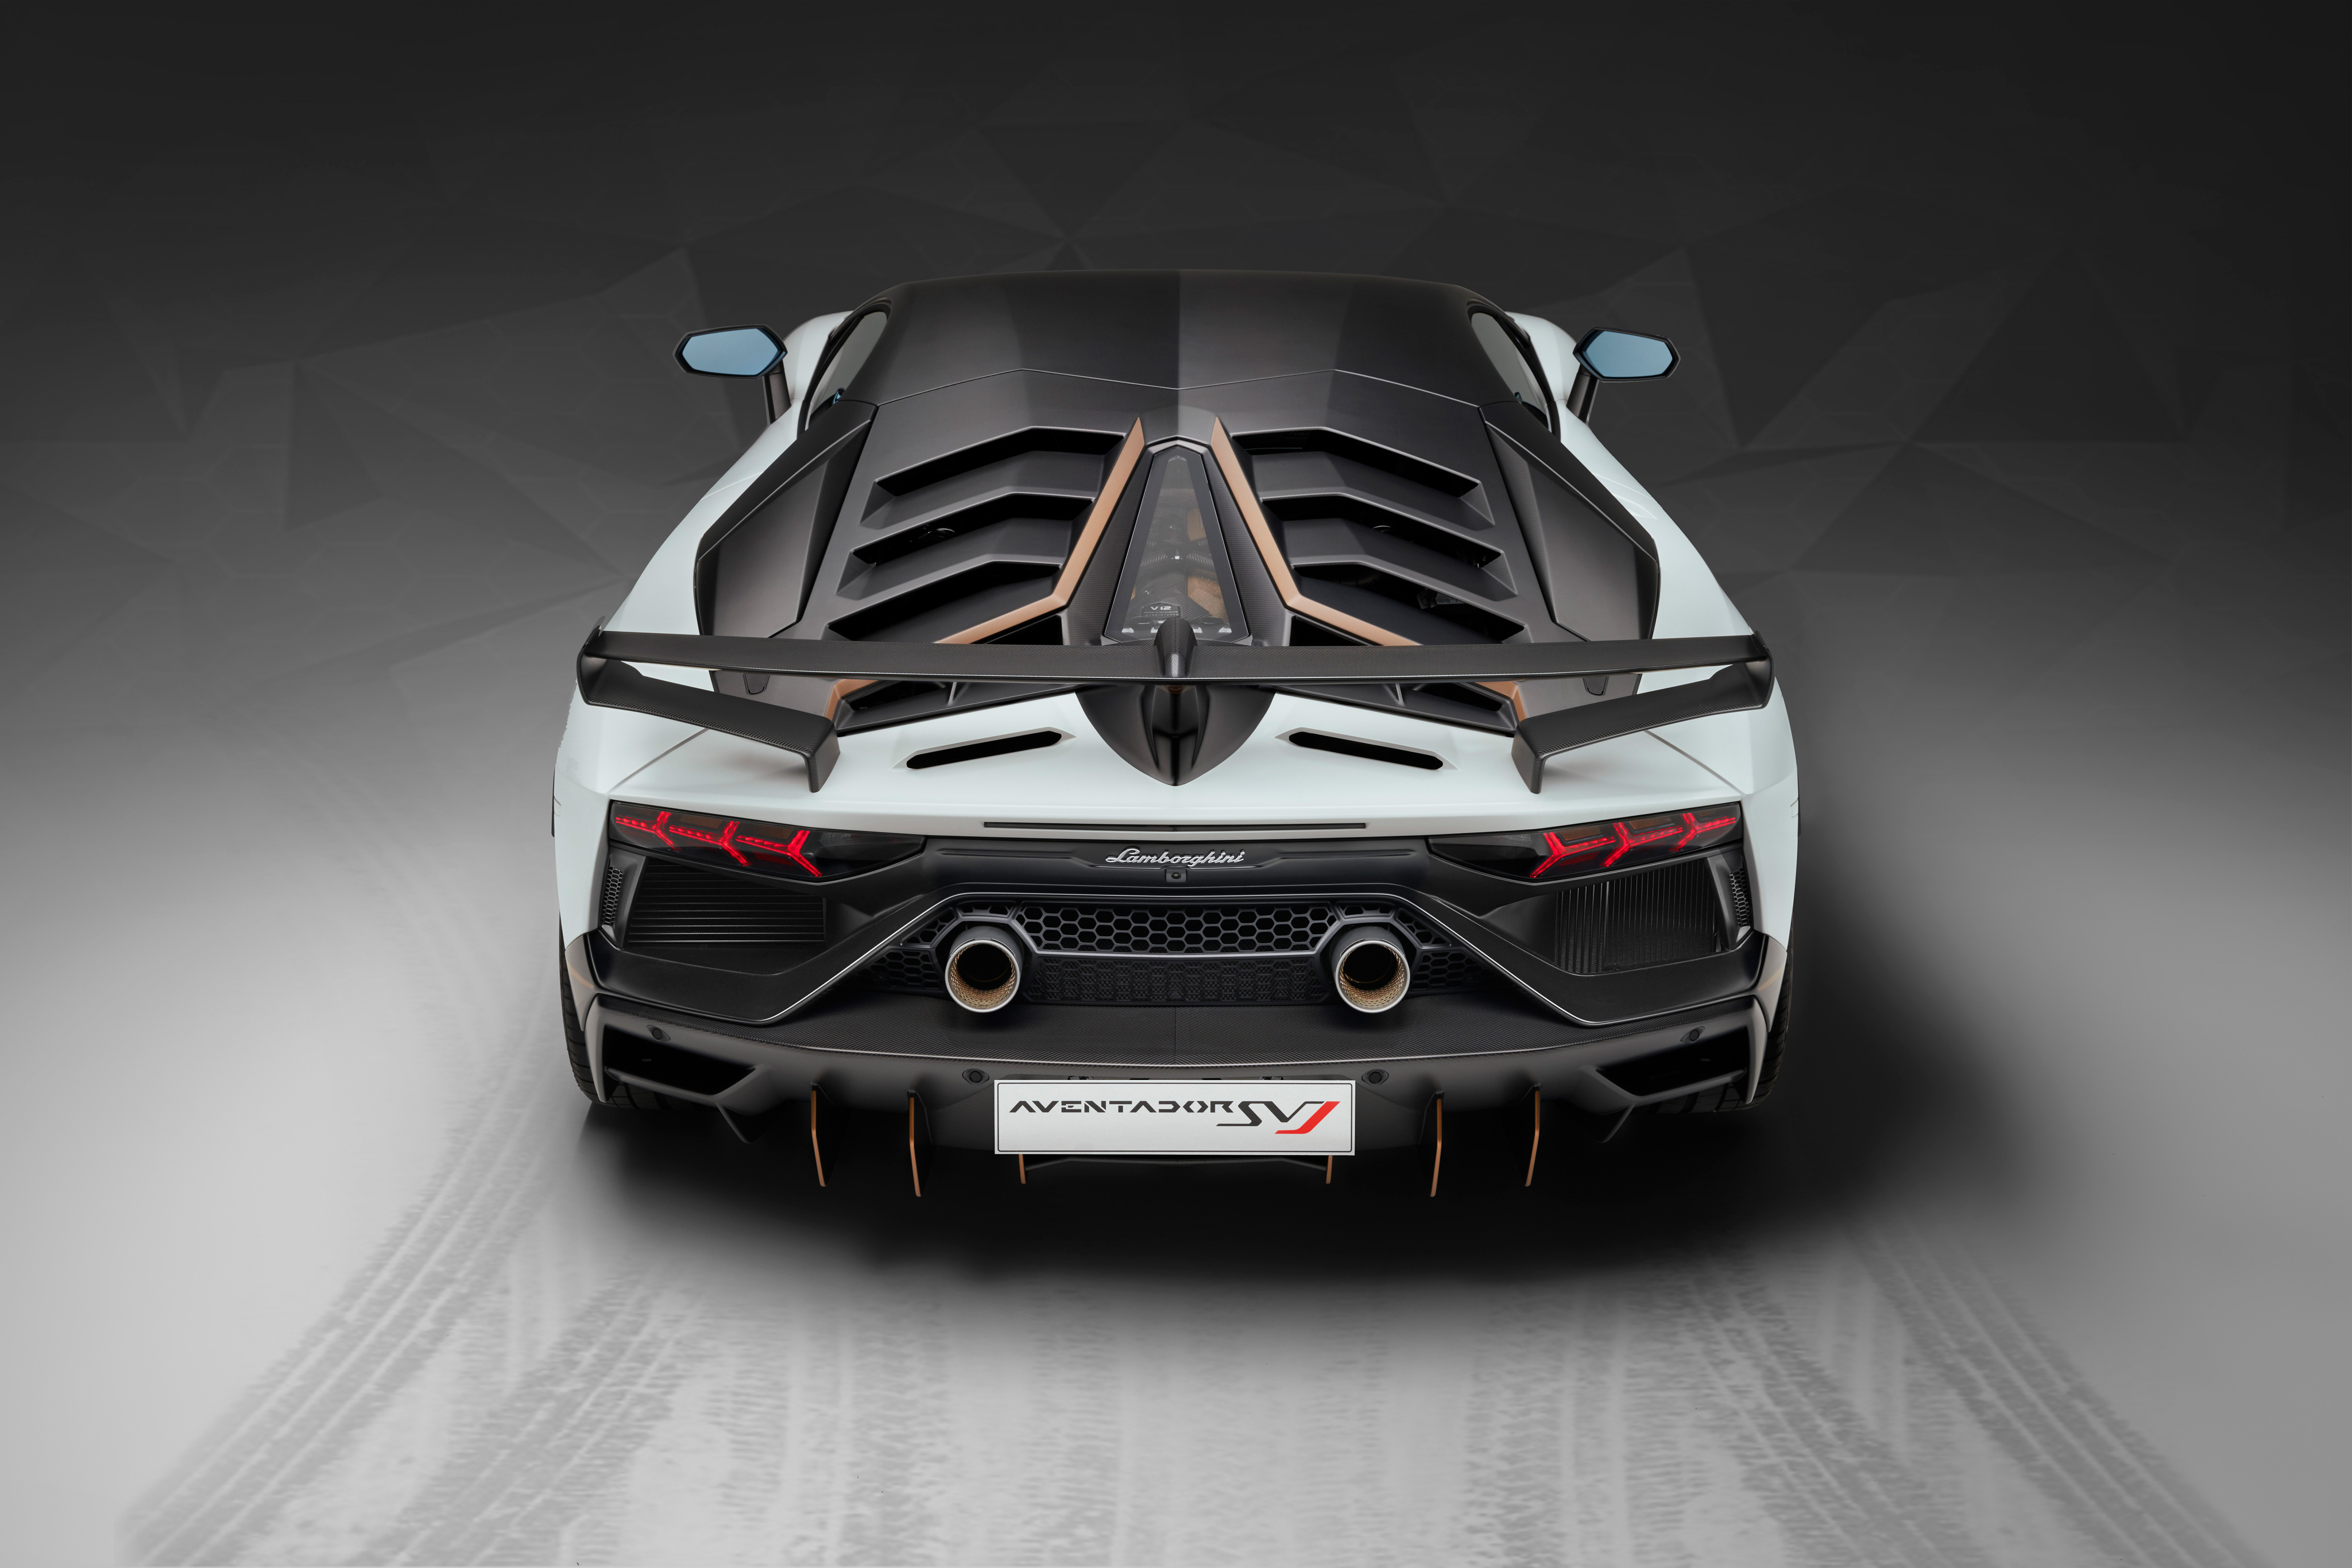 Lamborghini Aventador SVJ 63 2018 Rear View, HD Cars, 4k ...